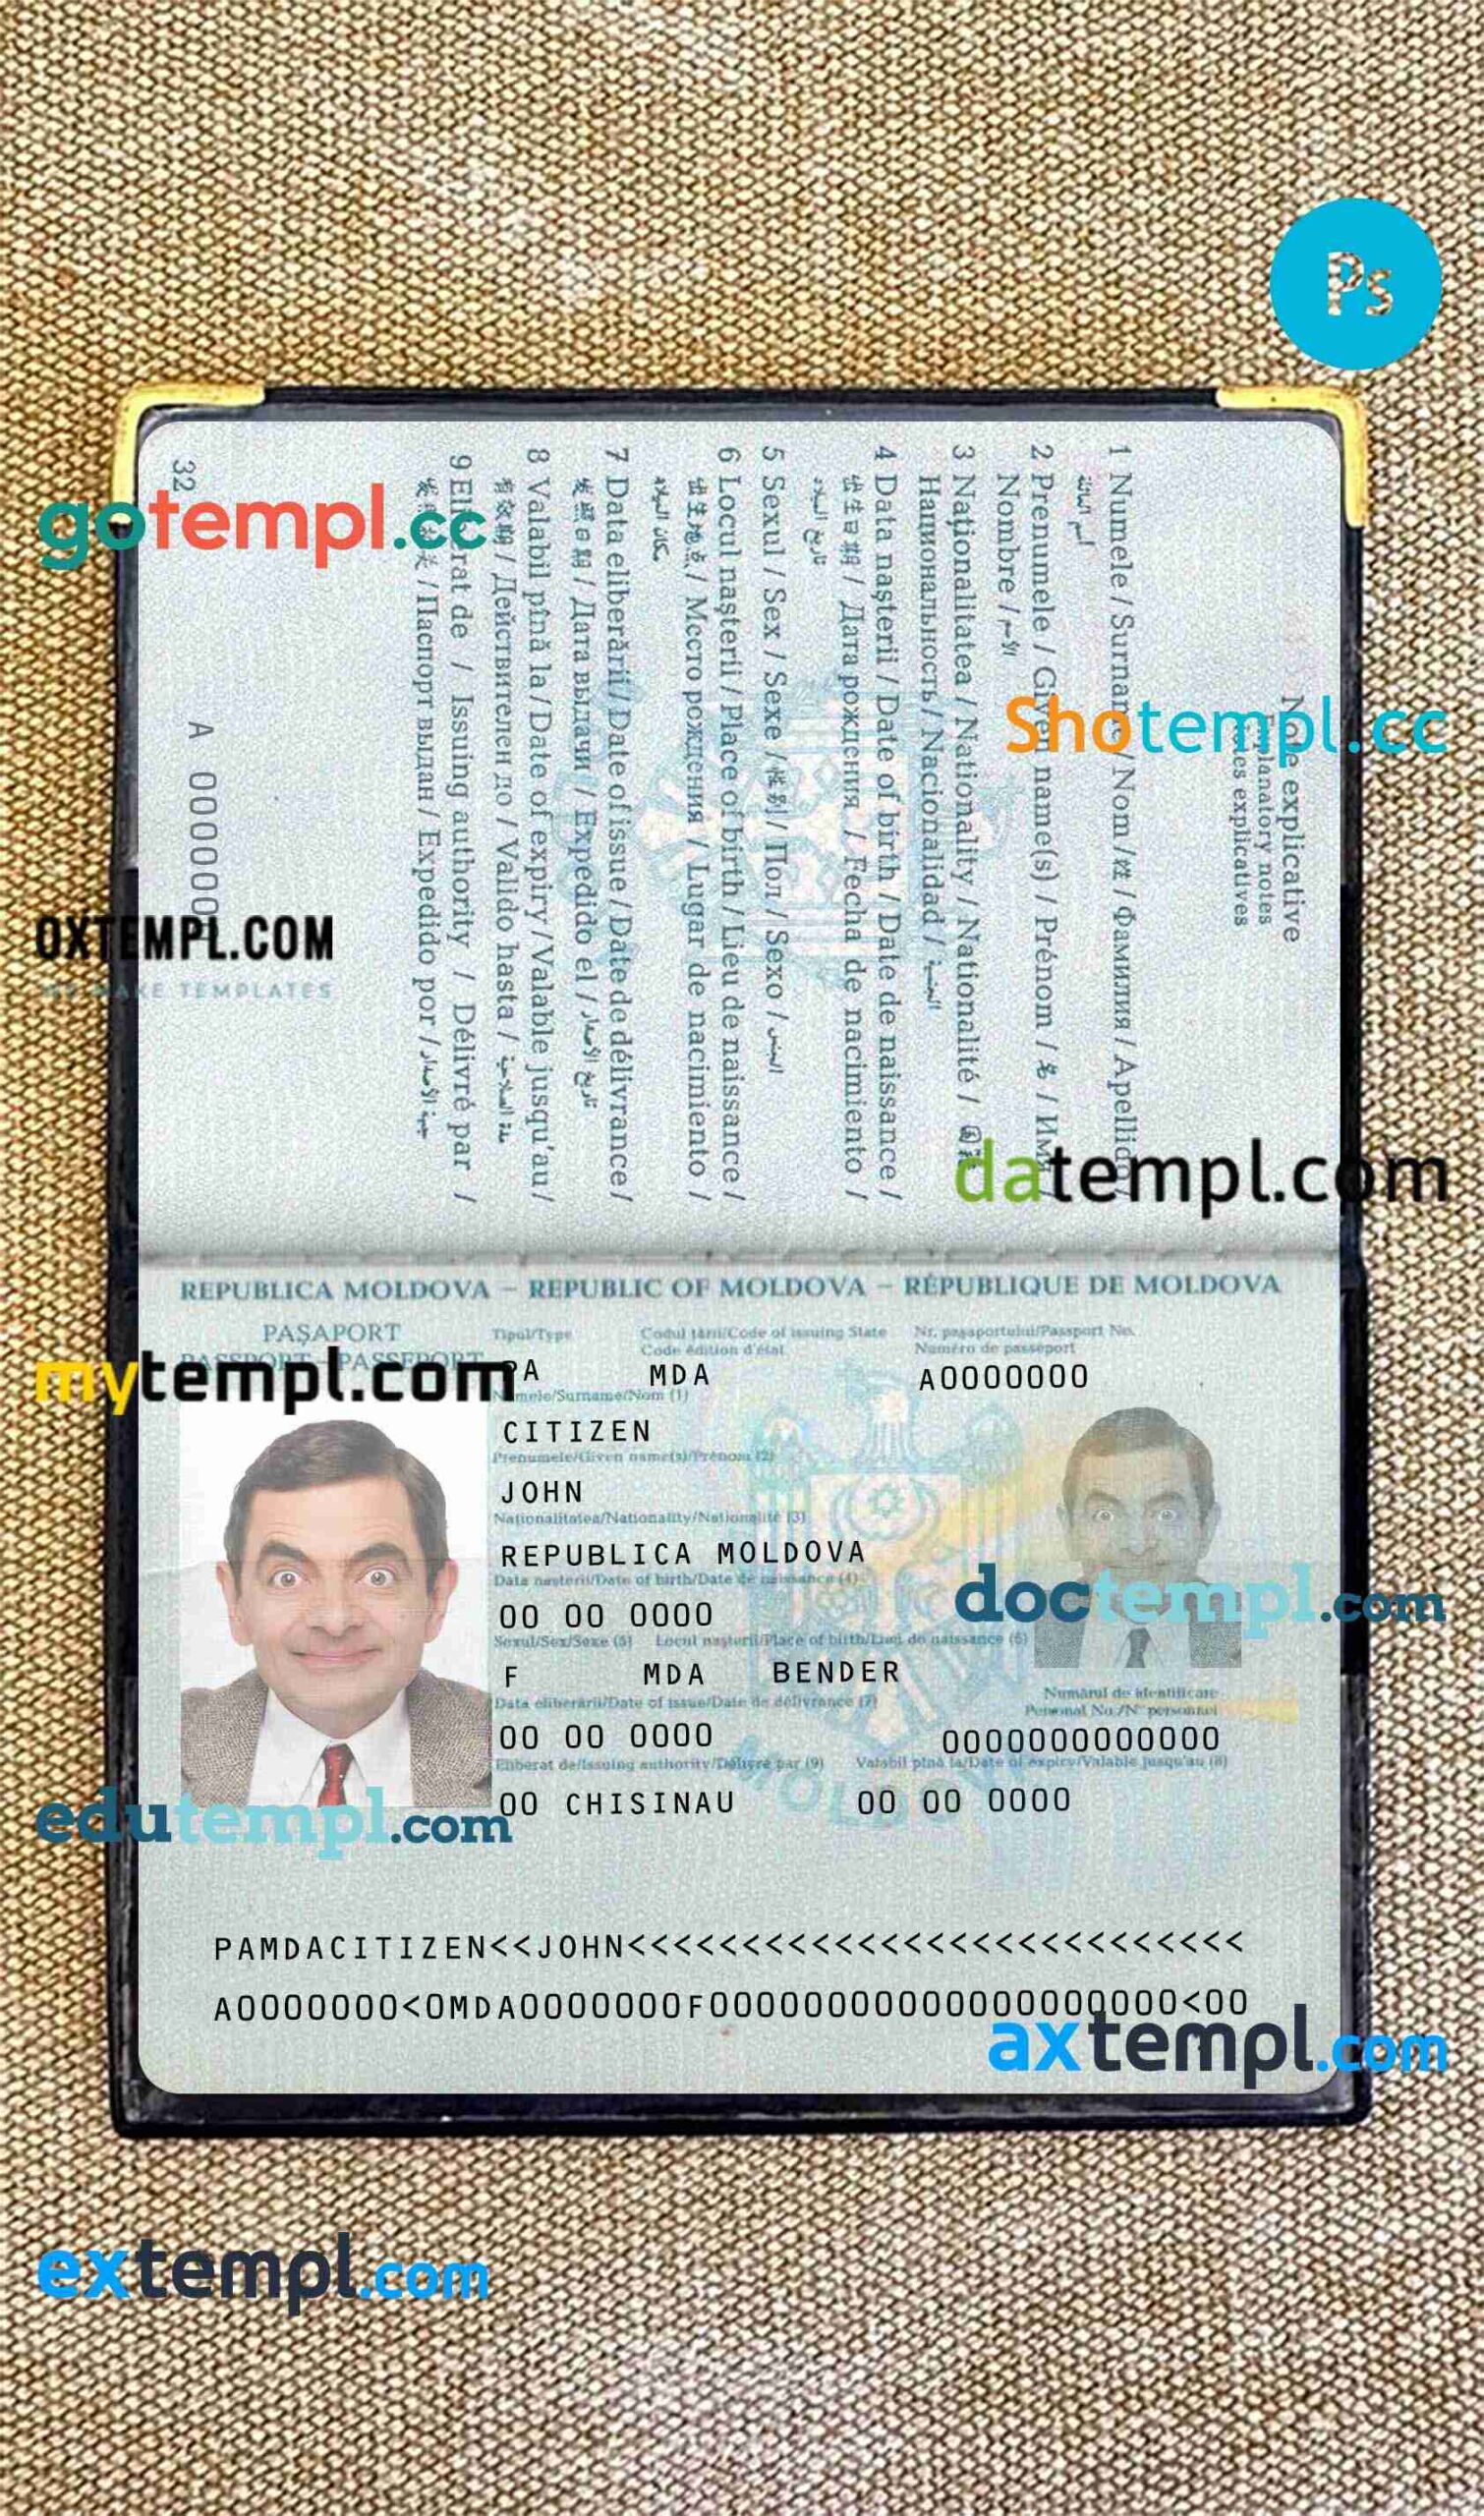 Nauru cat (animal, pet) passport PSD template, fully editable